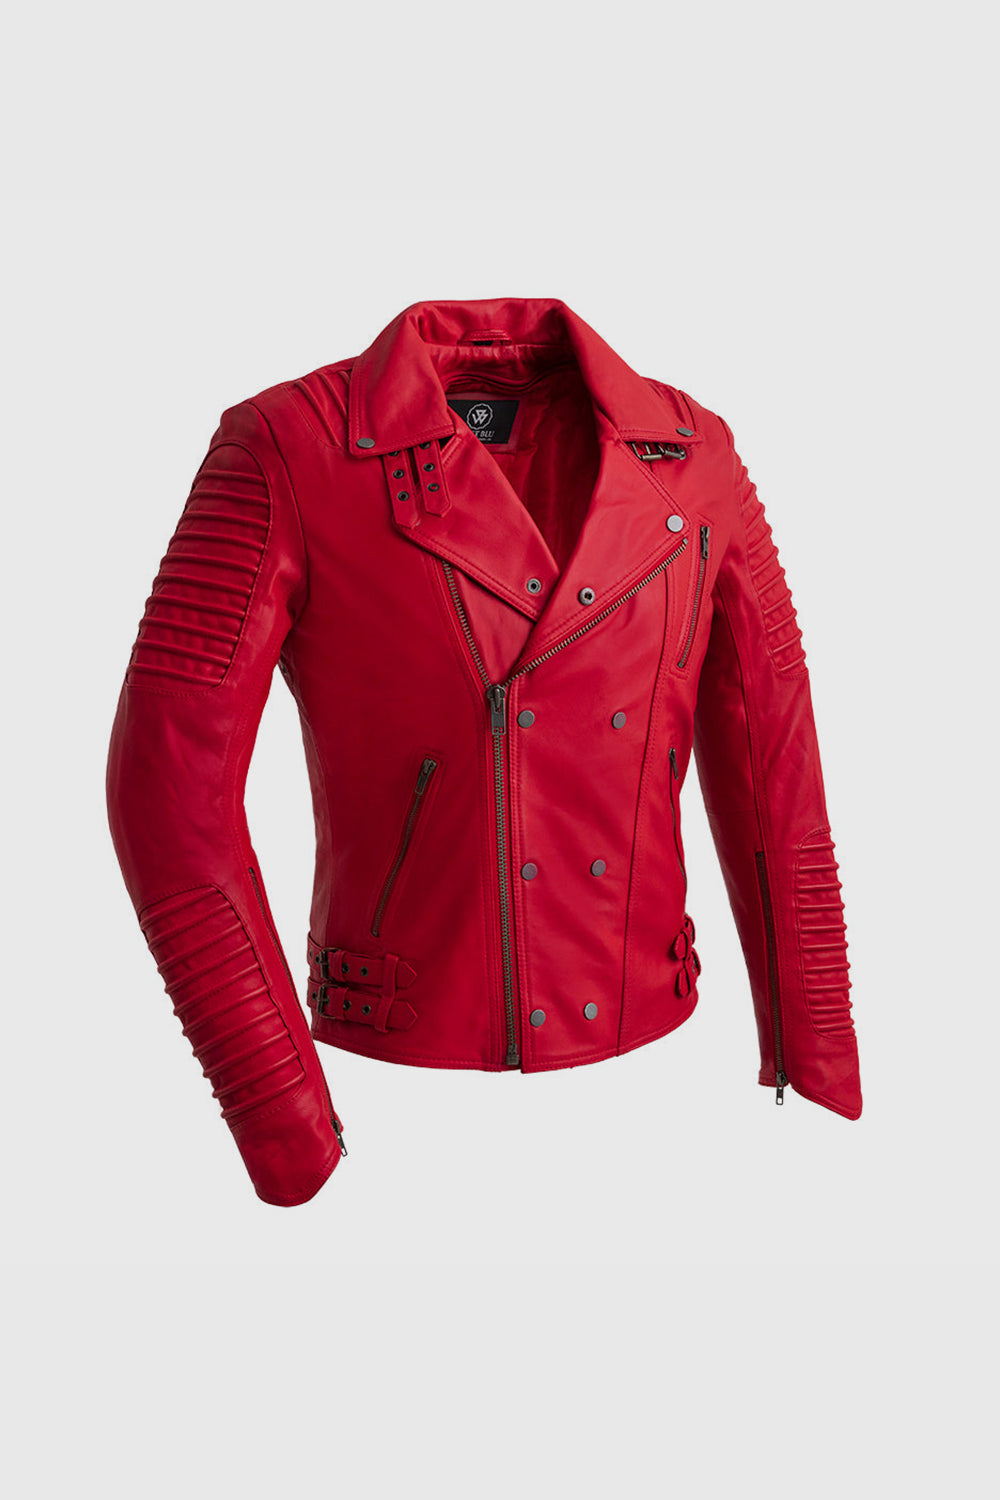 Brooklyn Mens Lambskin Leather Jacket Fire Red Men's Motorcycle style Jacket Whet Blu NYC S Fire Red 